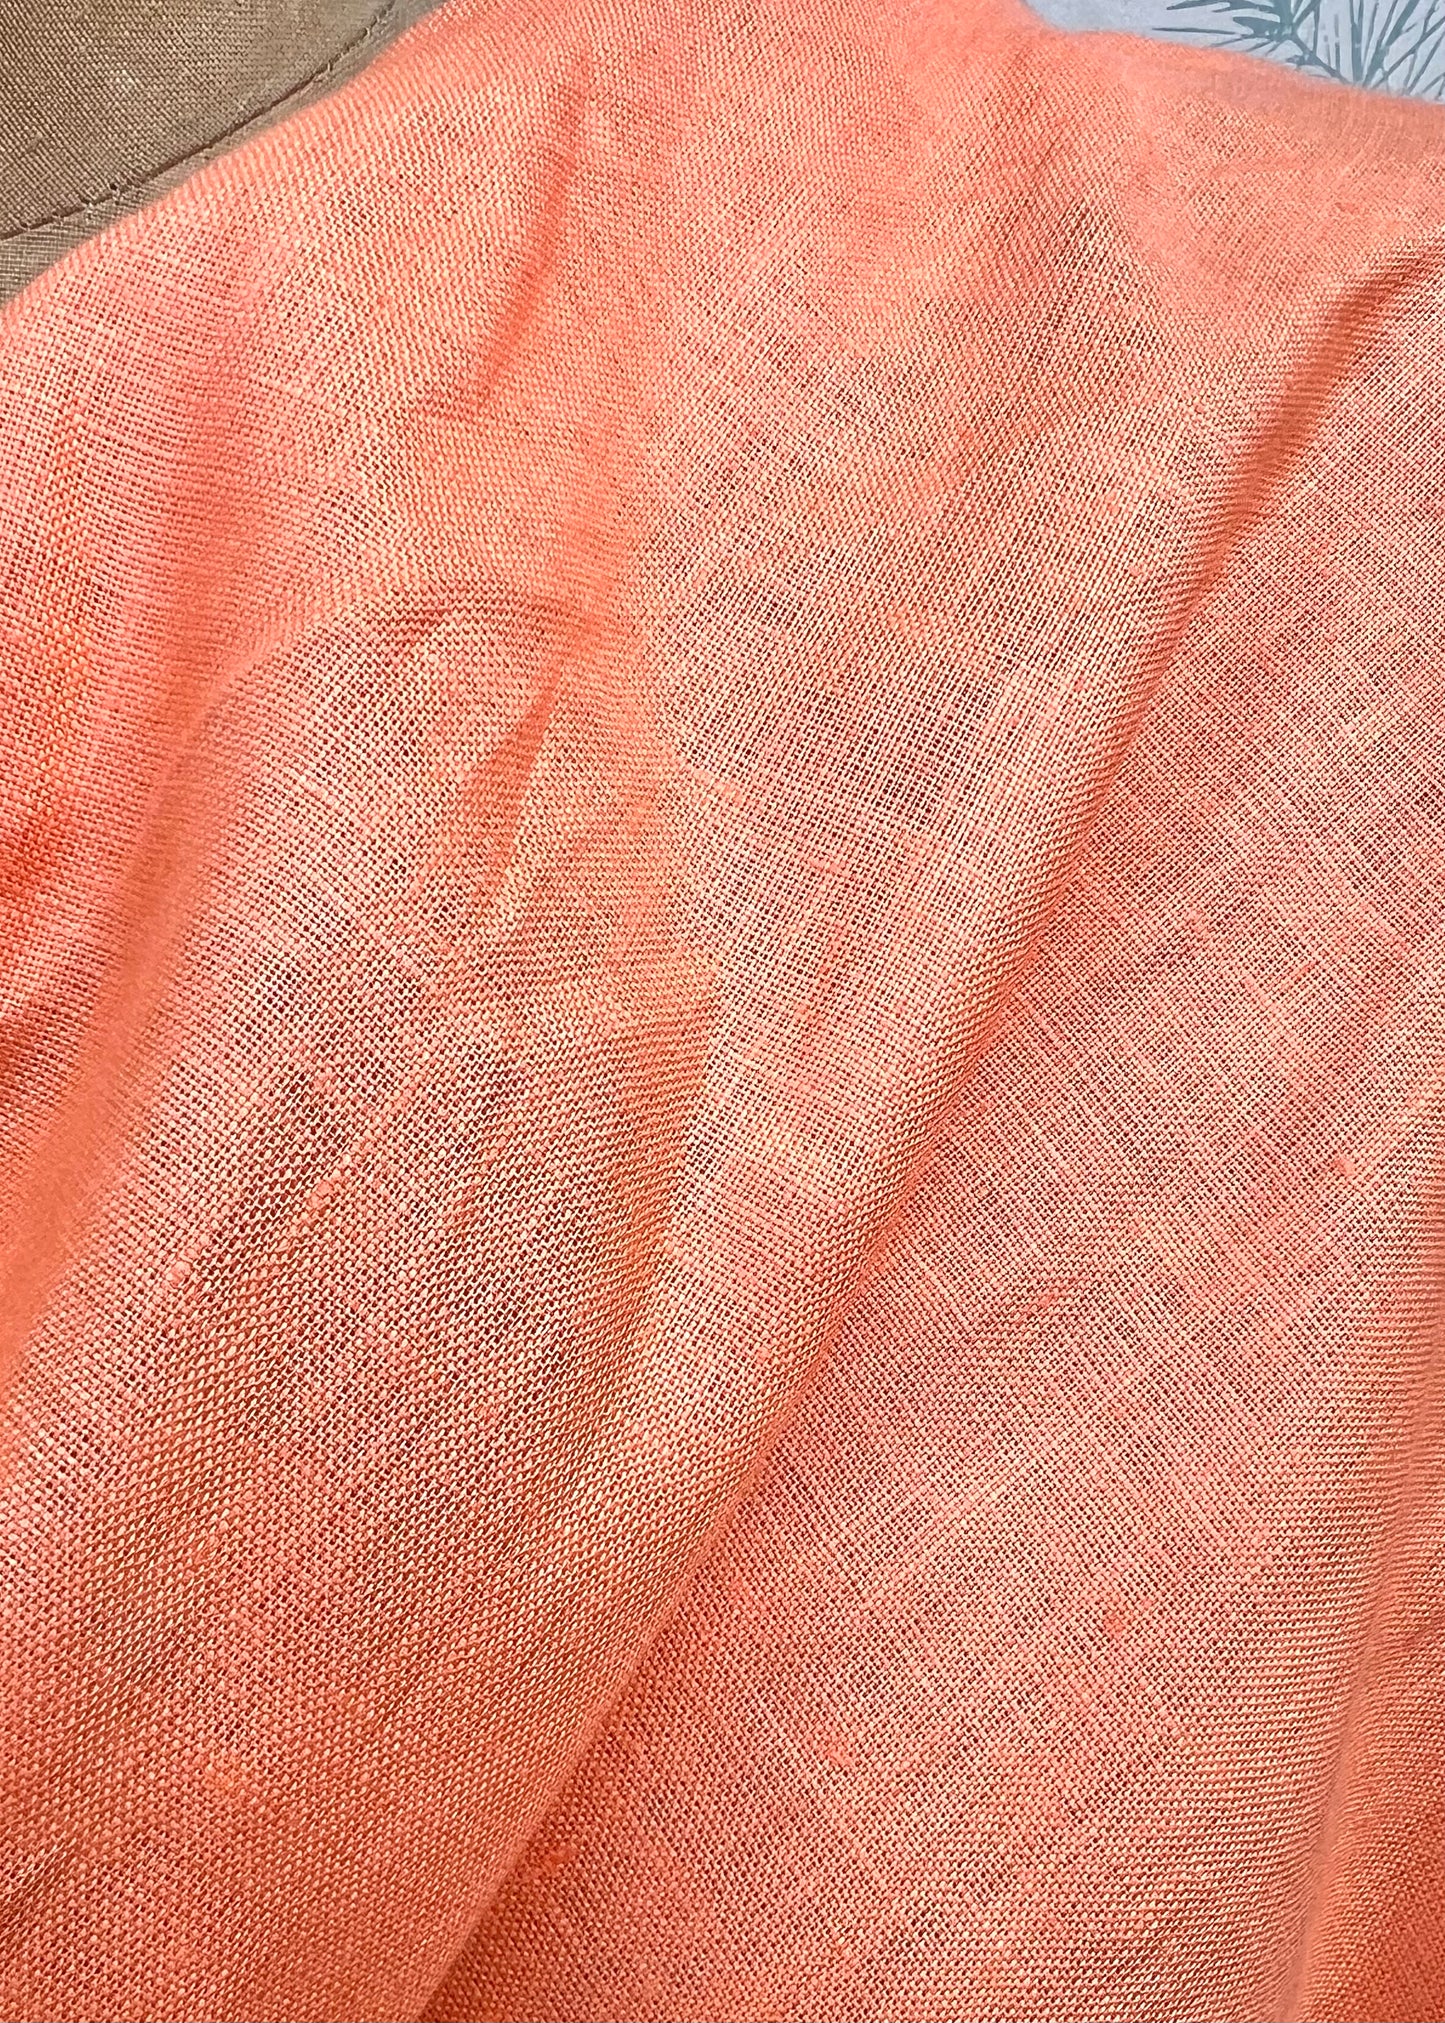 Frosted Mango Linen Medium Weight Fabric - Half Yard